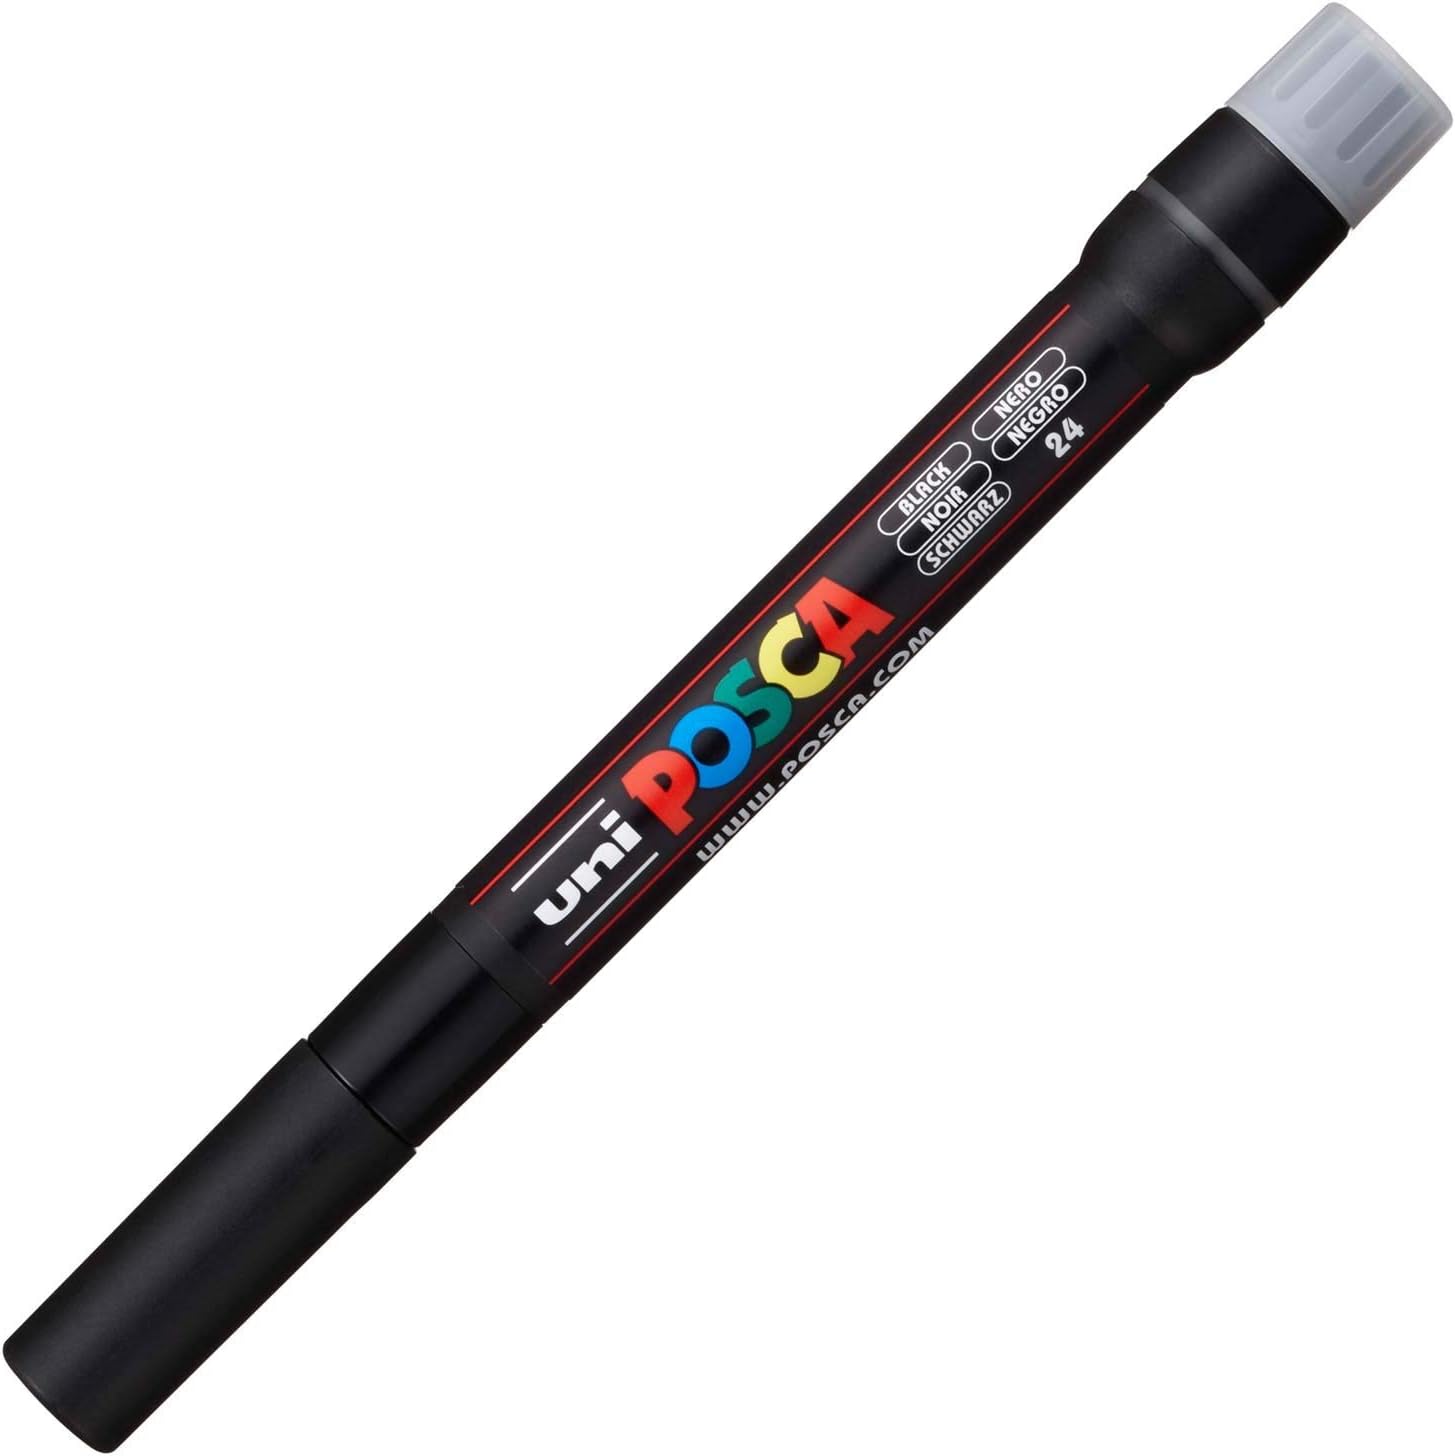 Posca Marker Brush in Black, Posca Pens for Art Supplies, School Supplies, Rock Art, Fabric Paint, F